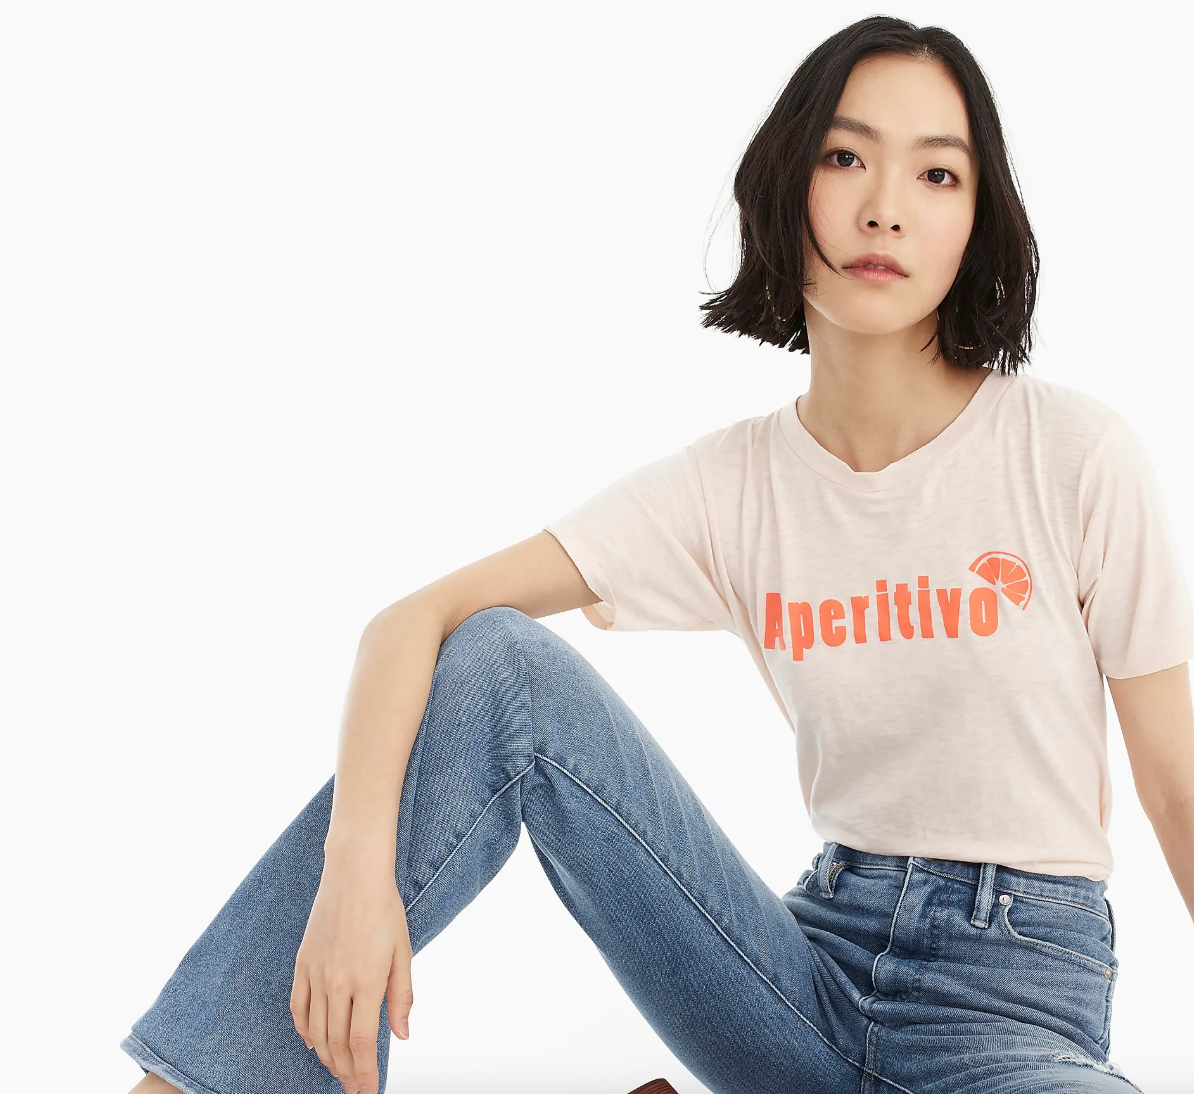 Camilla Atkins, CATKINS DESIGN for J. Crew Spring 2019, Aperitivo screen printed tee shirt- women's apparel-2.png